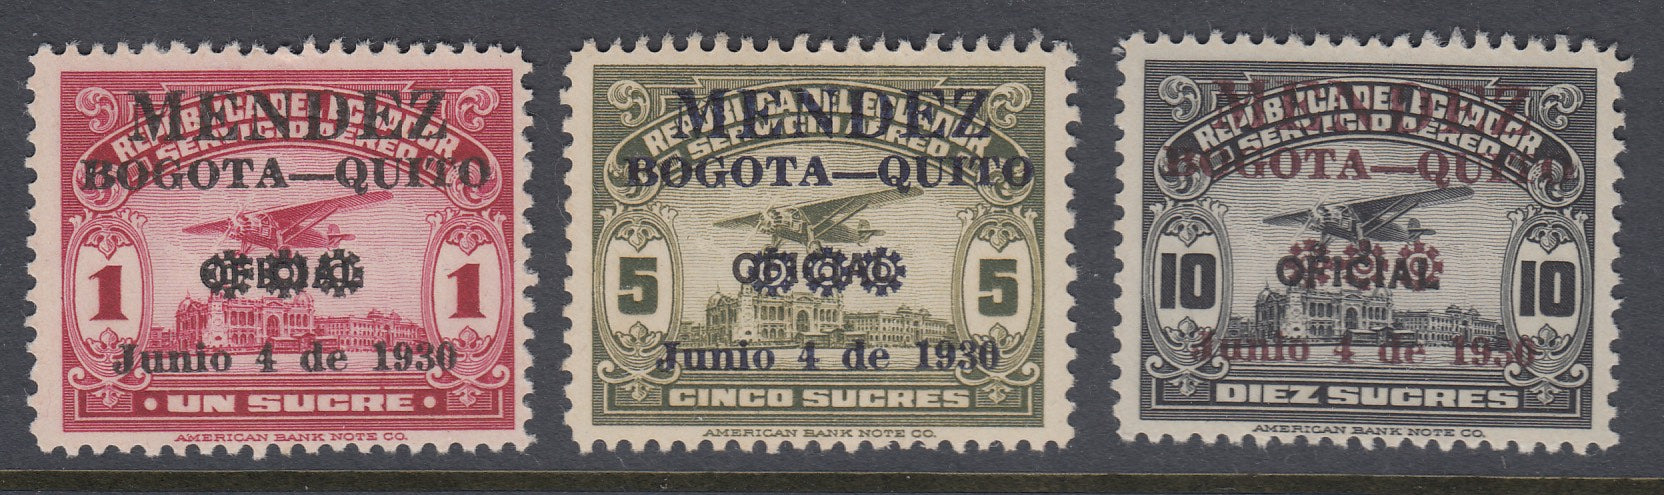 Ecuador 1930 Mendez Airmail Overprints Complete Set LM Mint. Scott C32-C34